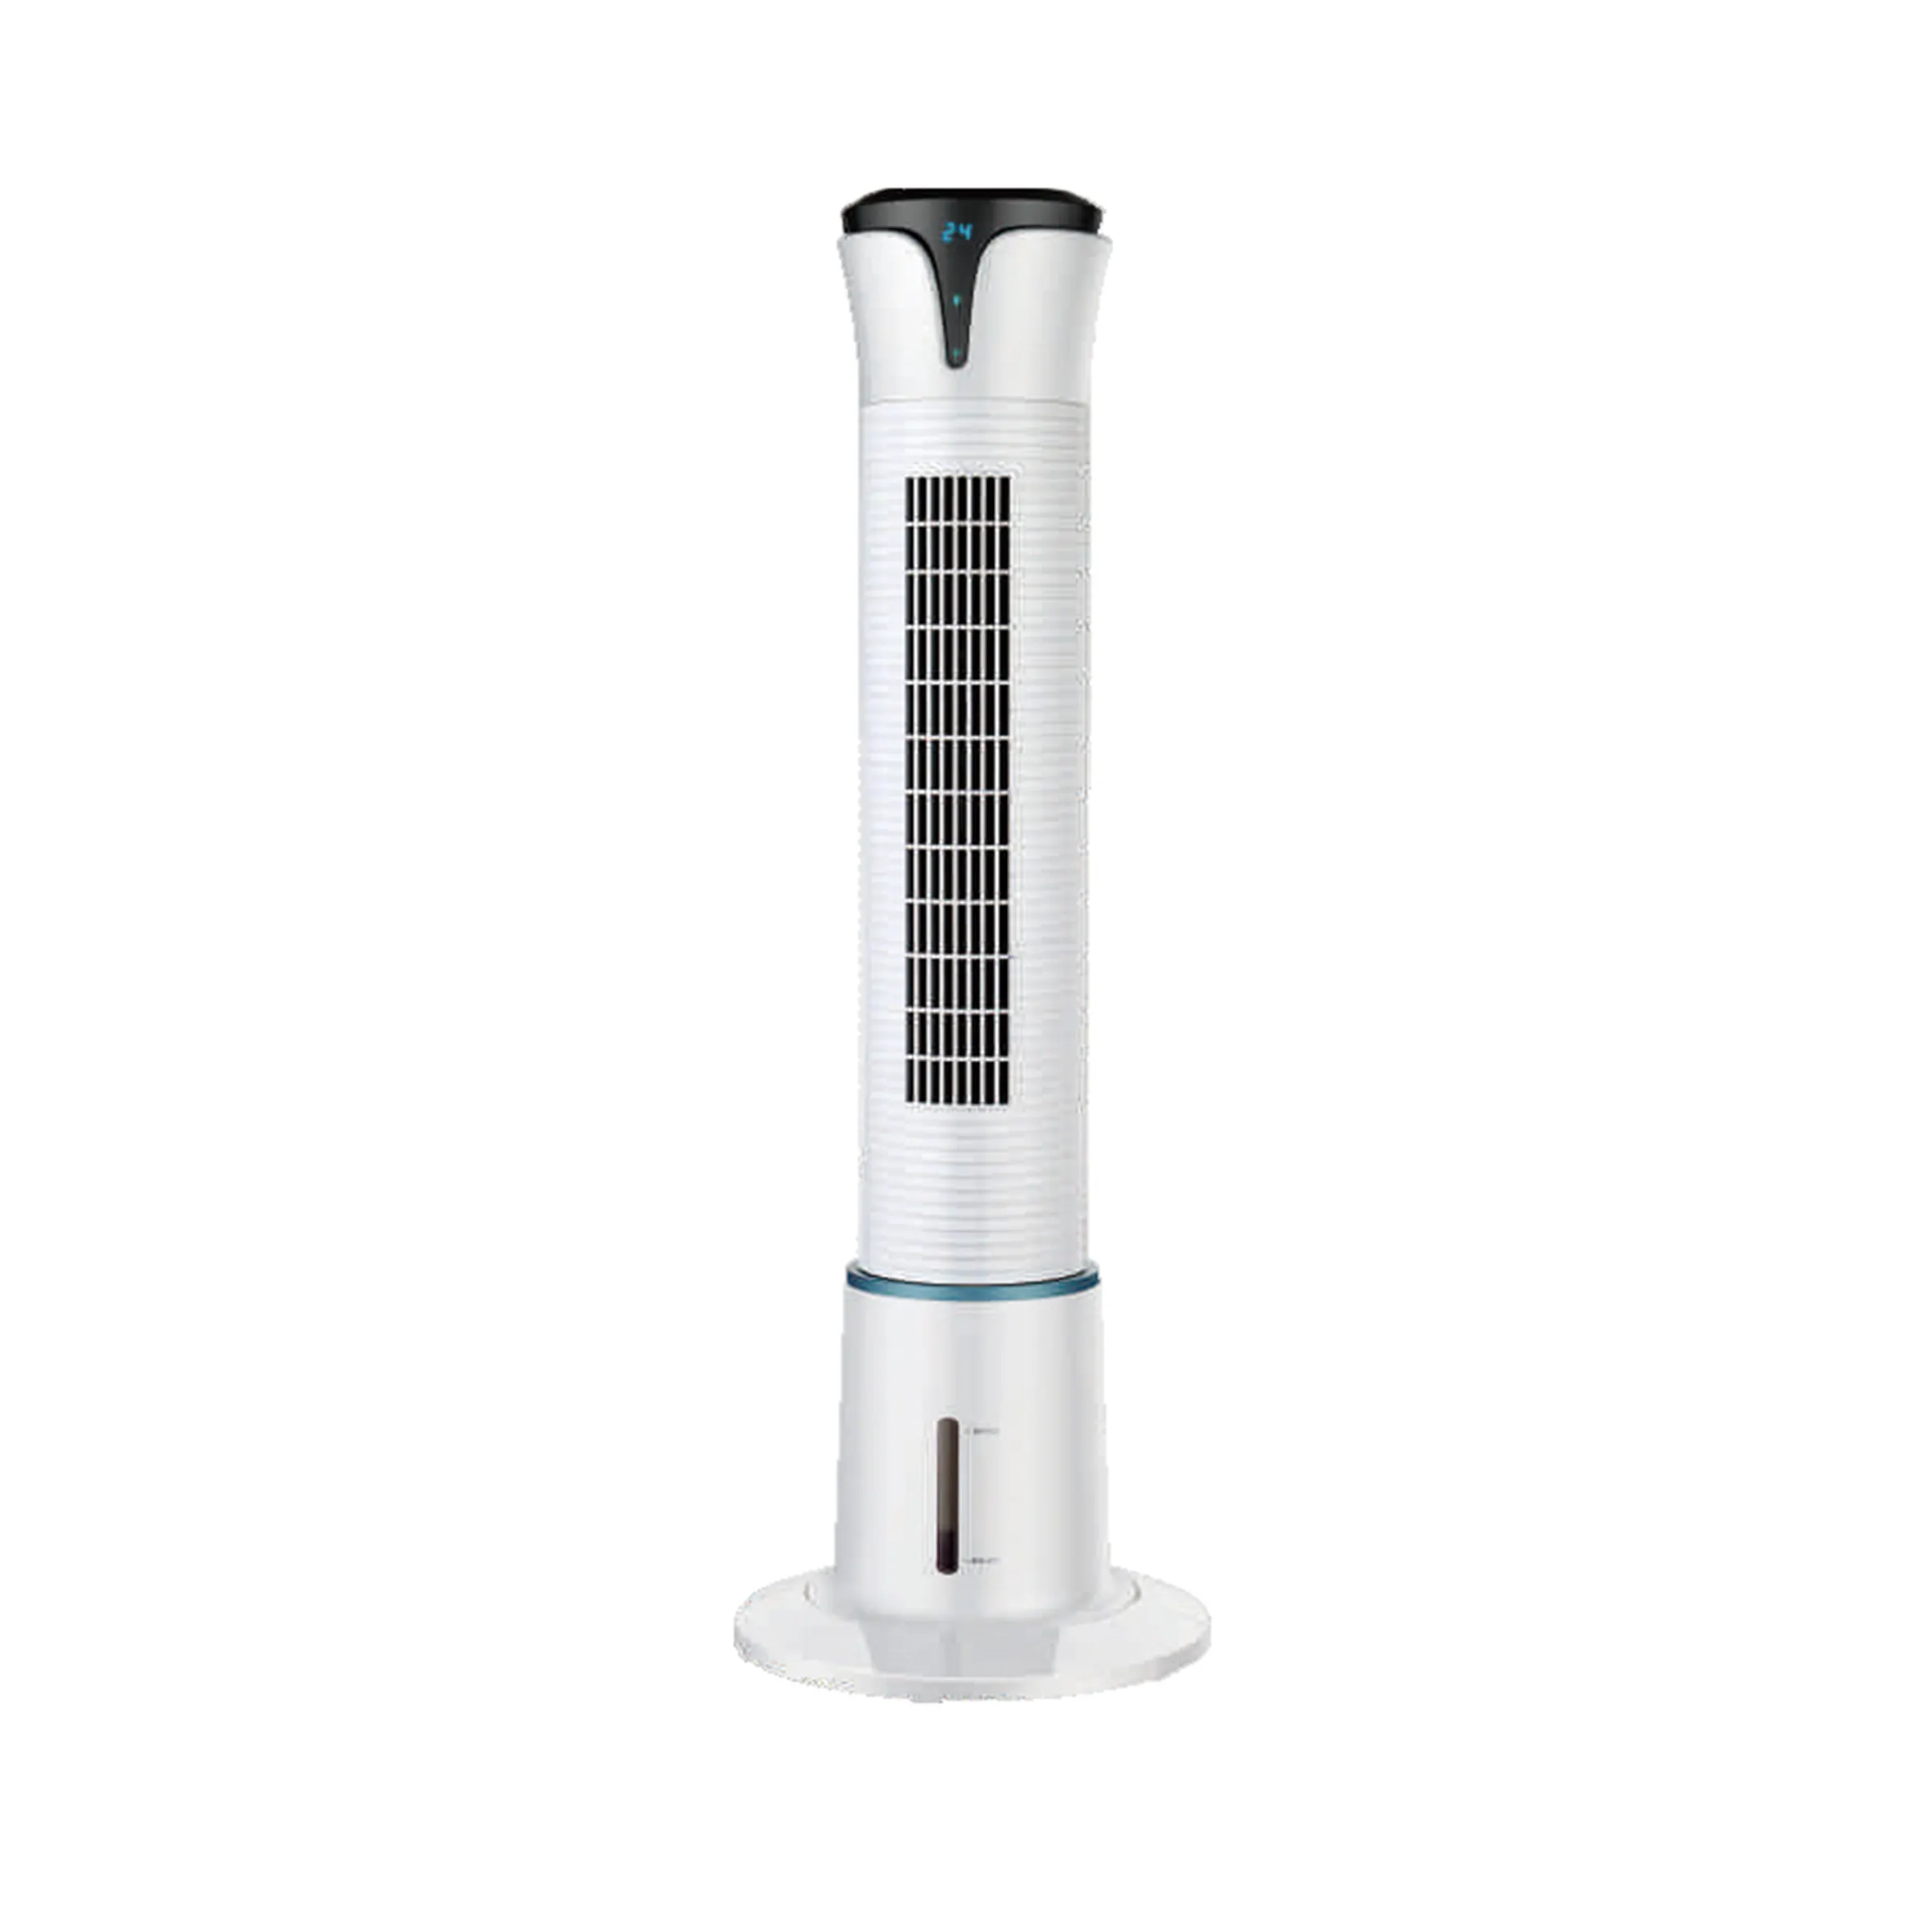 water tower fan cooling